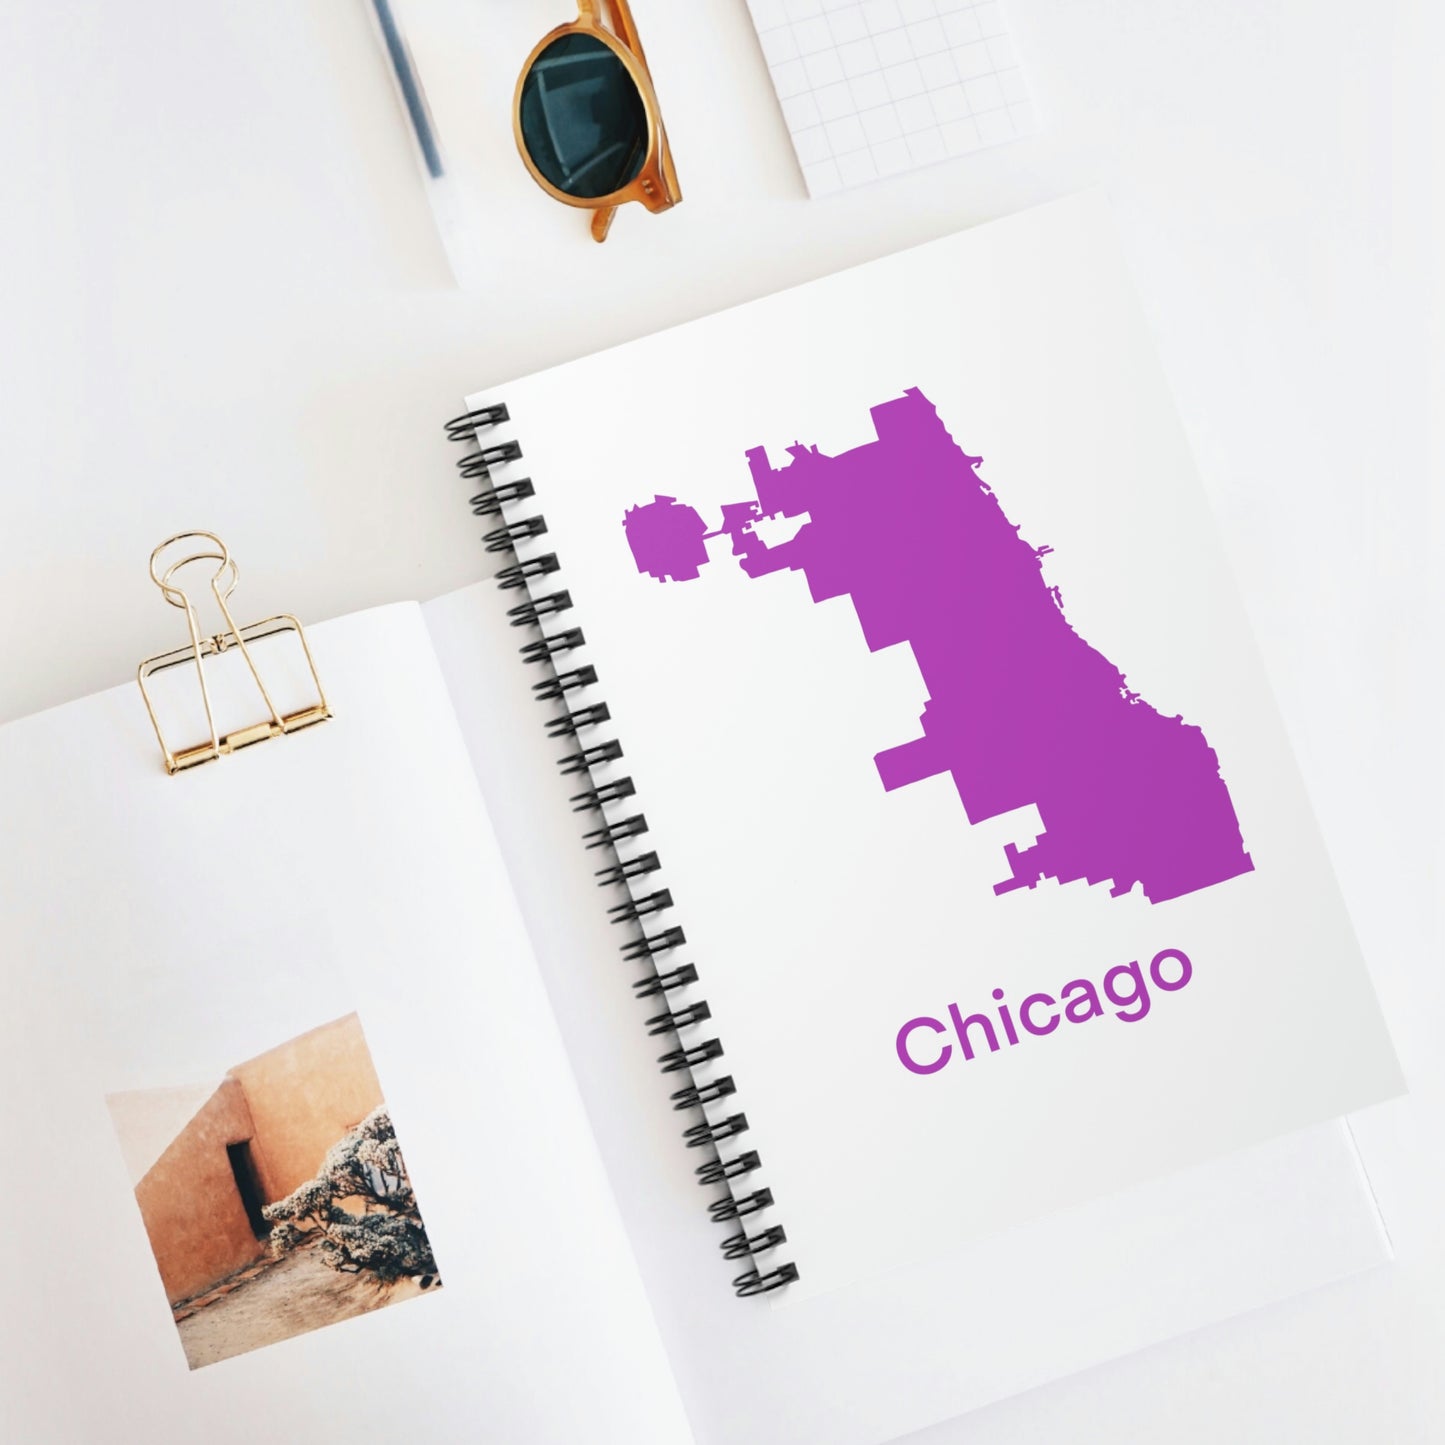 Chicago Pink Spiral Notebook - Ruled Line